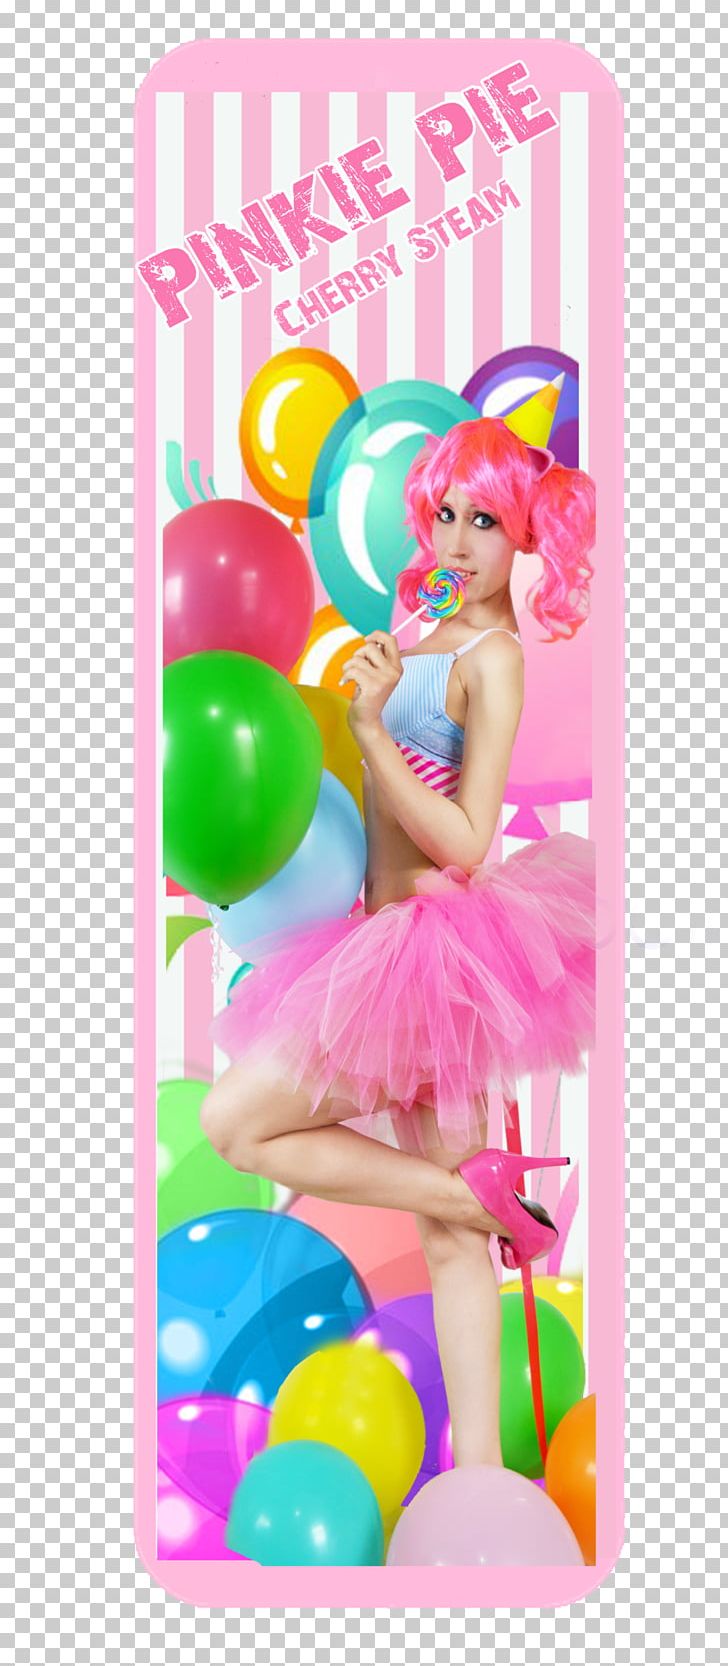 Pinkie Pie Cosplay Applejack Disguise Balloon PNG, Clipart, 3 July, 4 June, Applejack, Artist, Balloon Free PNG Download